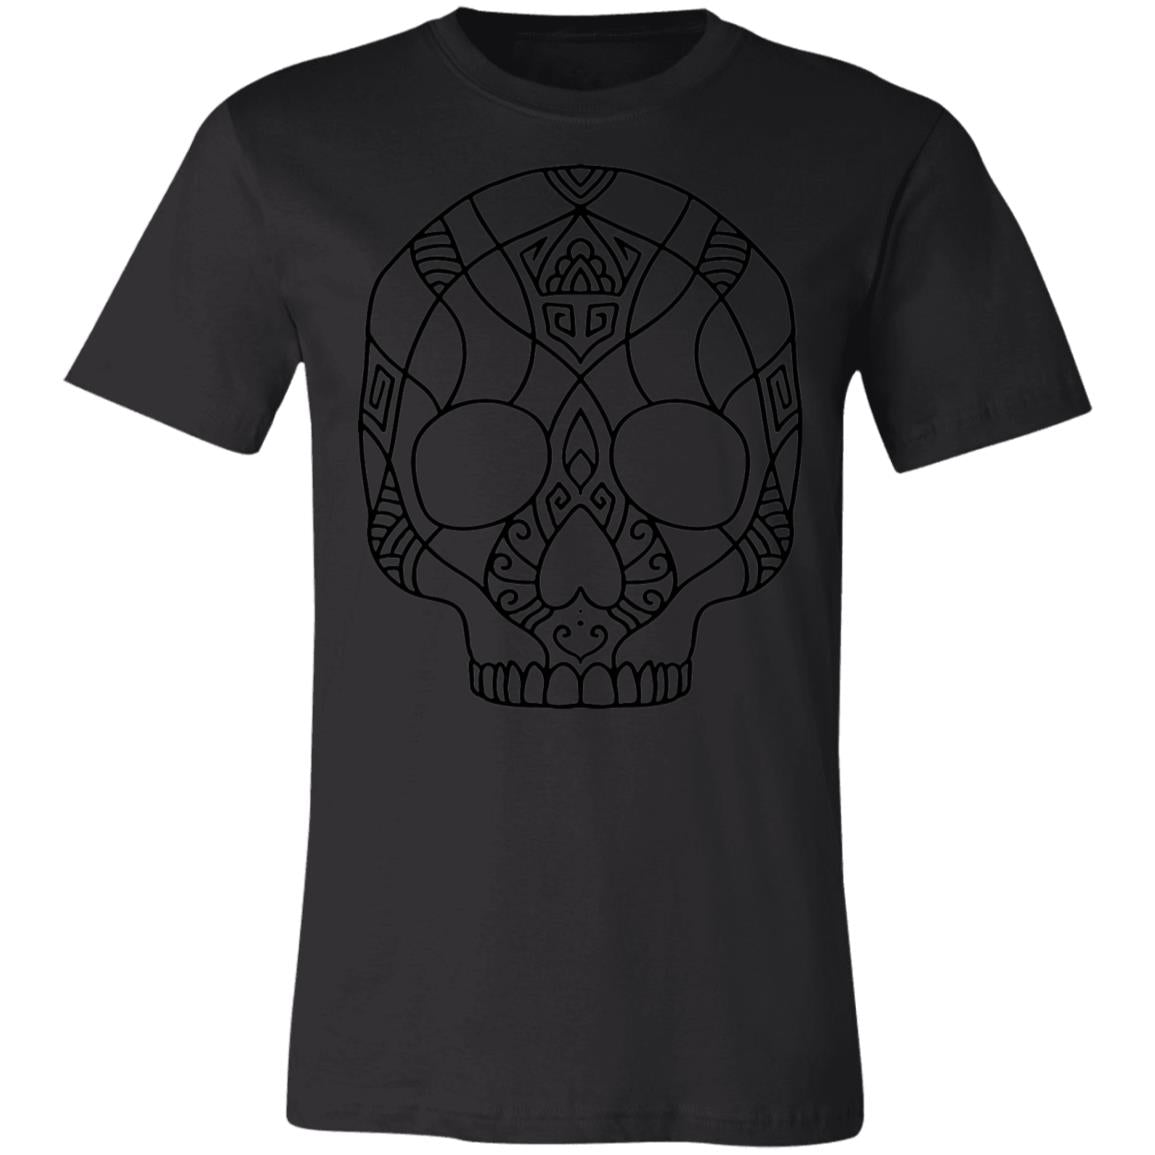 Skull 127 Santa Muerte Shirt-Express Your Love Gifts